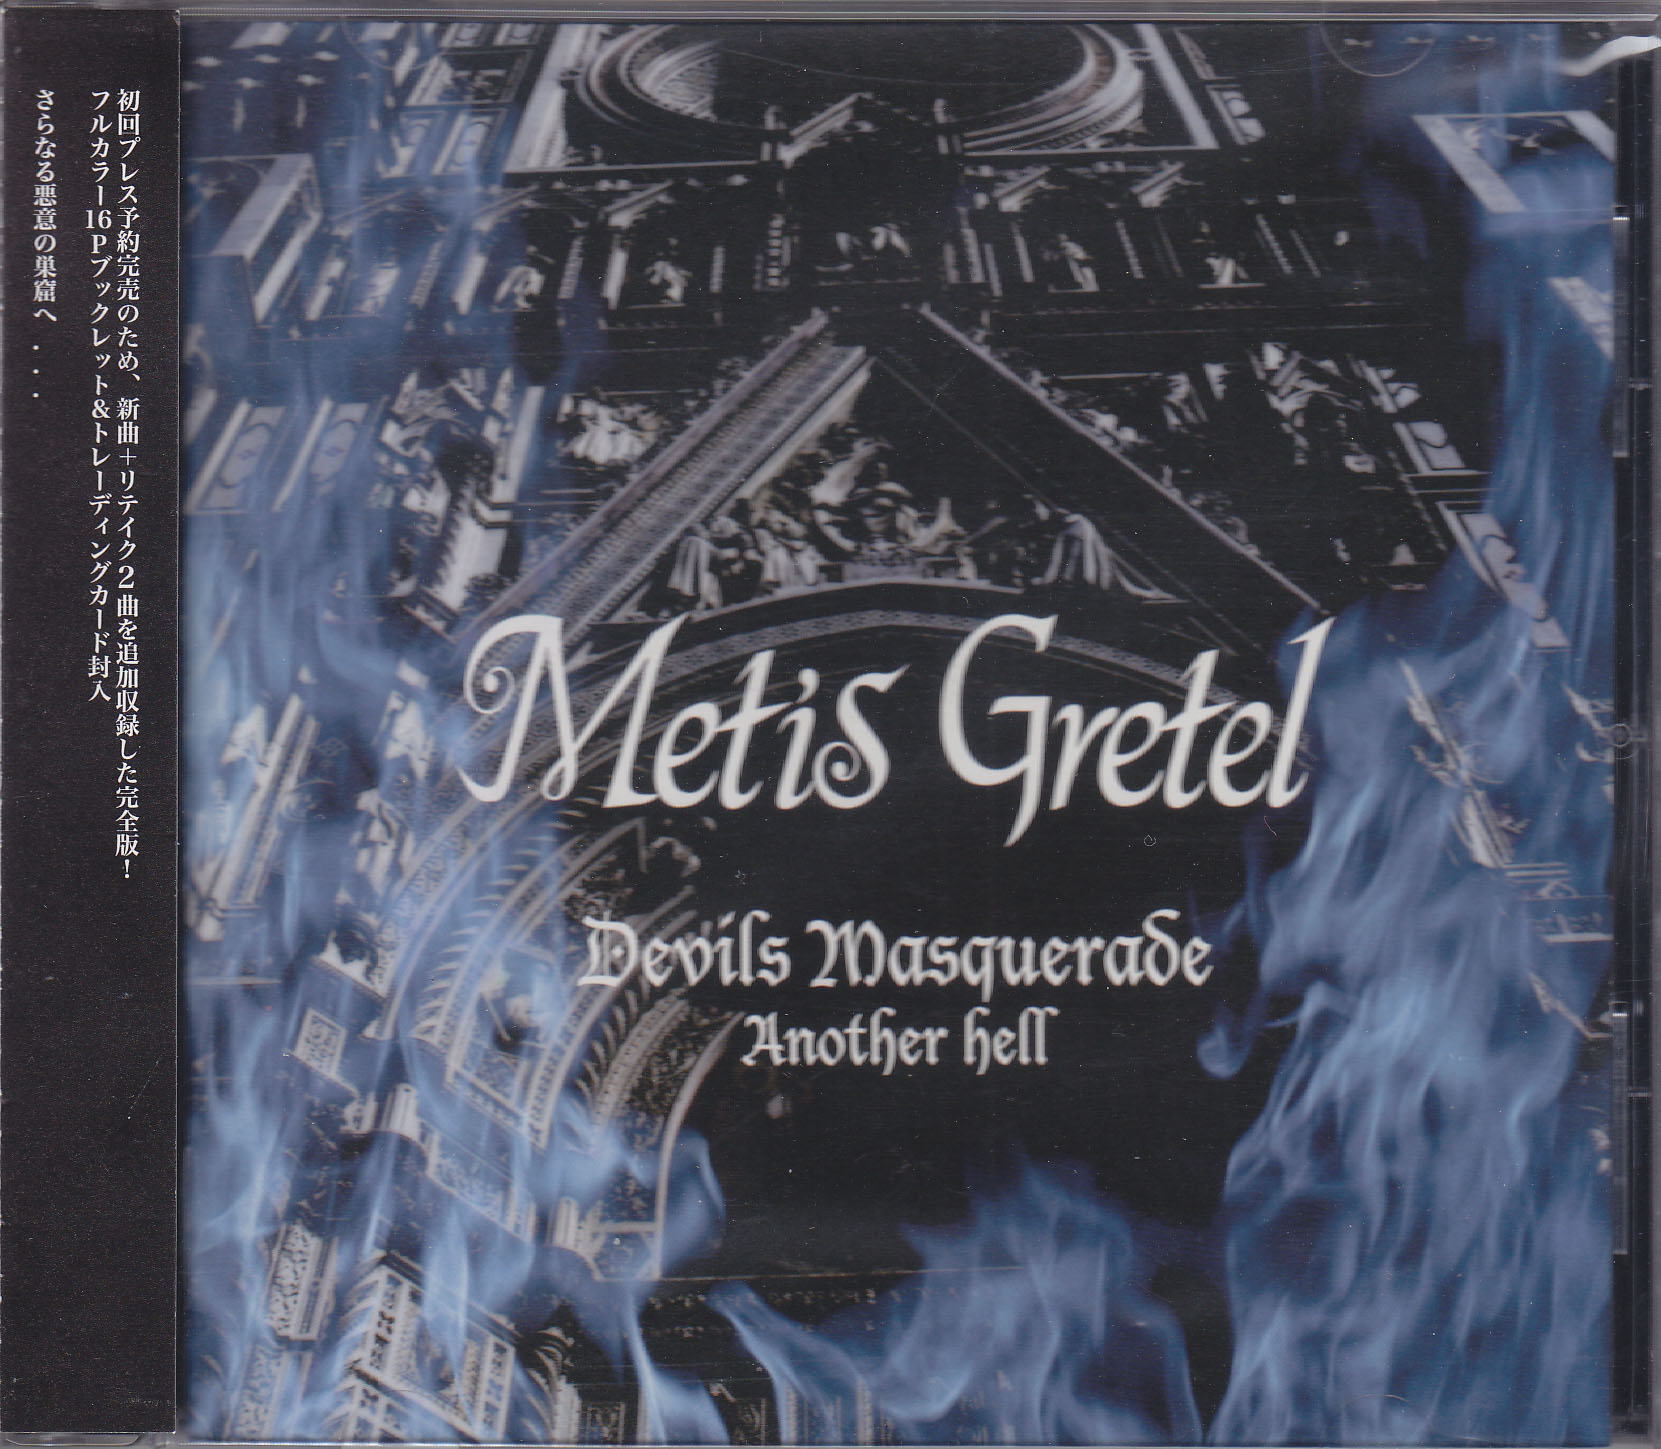 Metis Gretel ( メティスグレーテル )  の CD Devils Masquerade-Another hell-